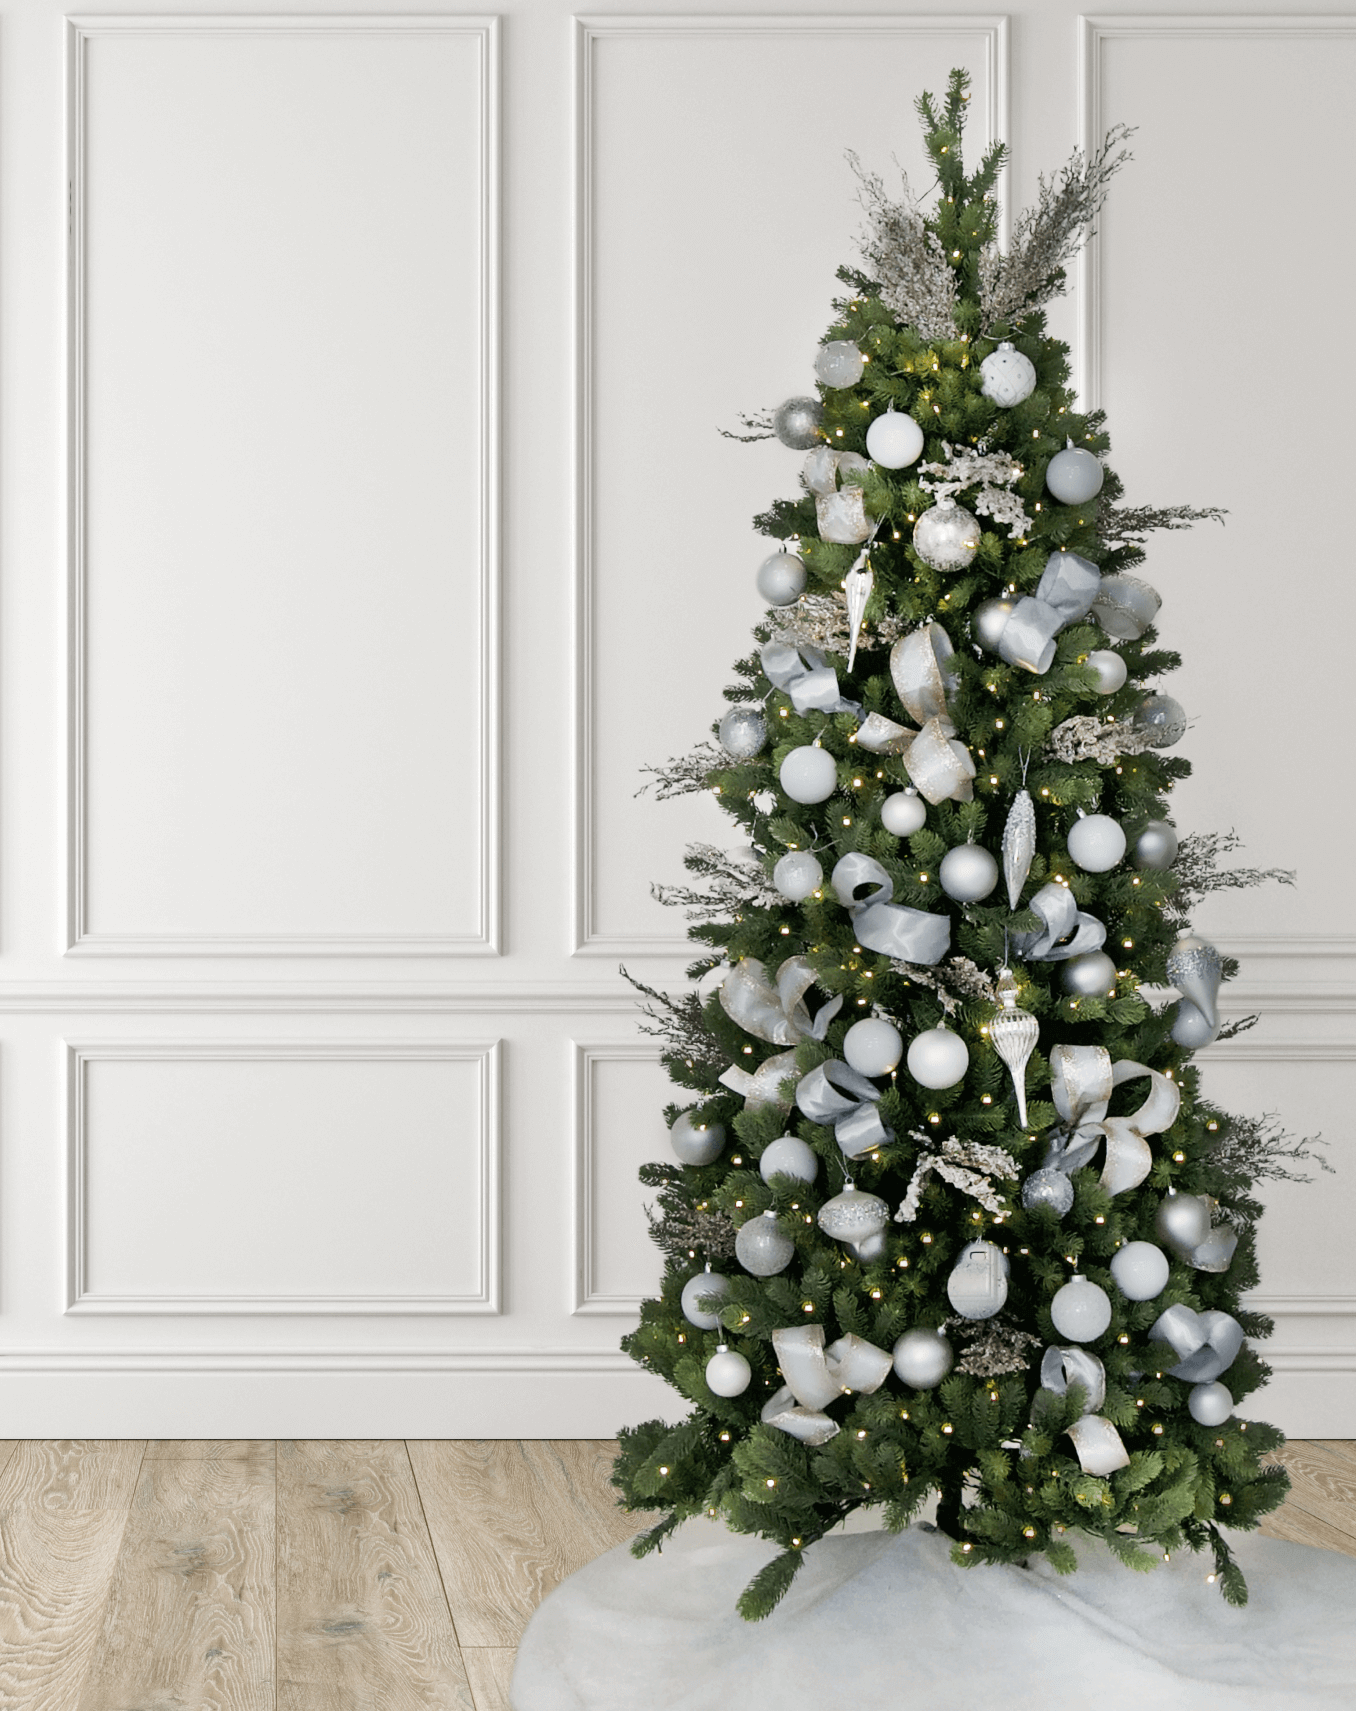 King of Christmas White Shatterproof Ornaments (48 Pack)